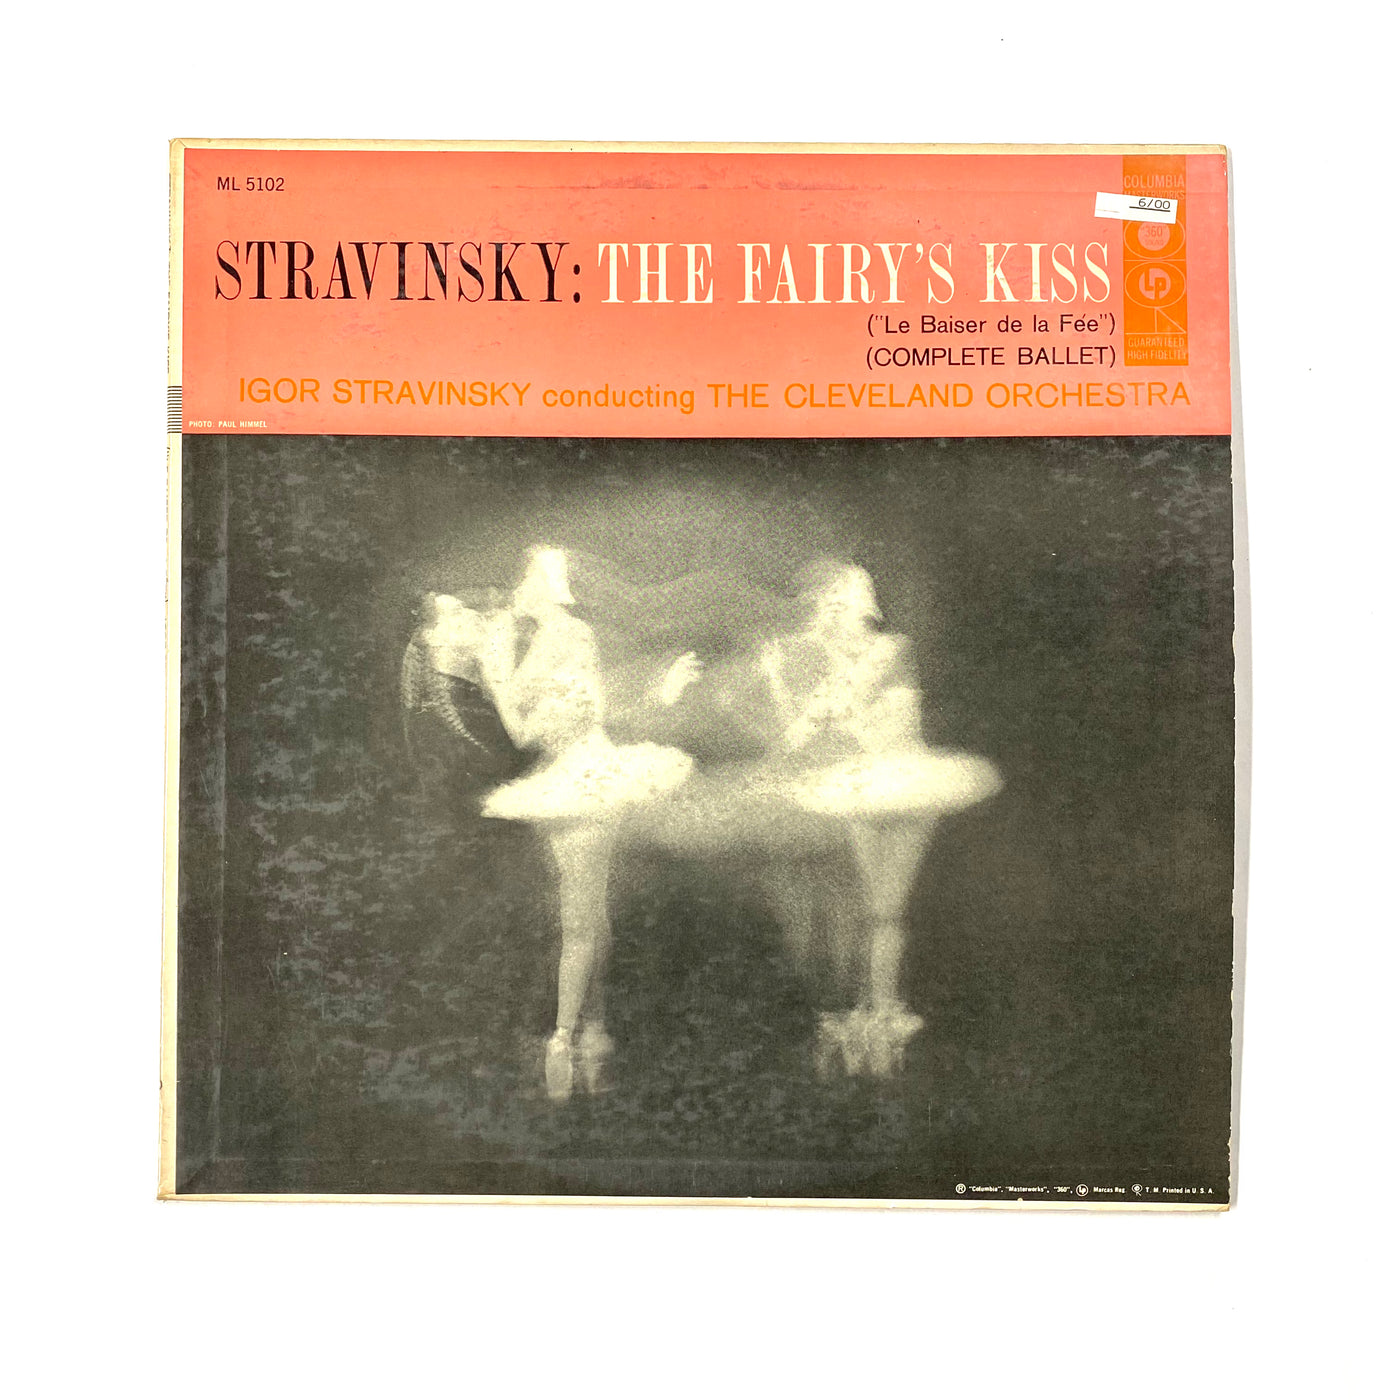 Igor Stravinsky Conducting The Cleveland Orchestra - The Fairy's Kiss ("Le Baiser De La Fée")